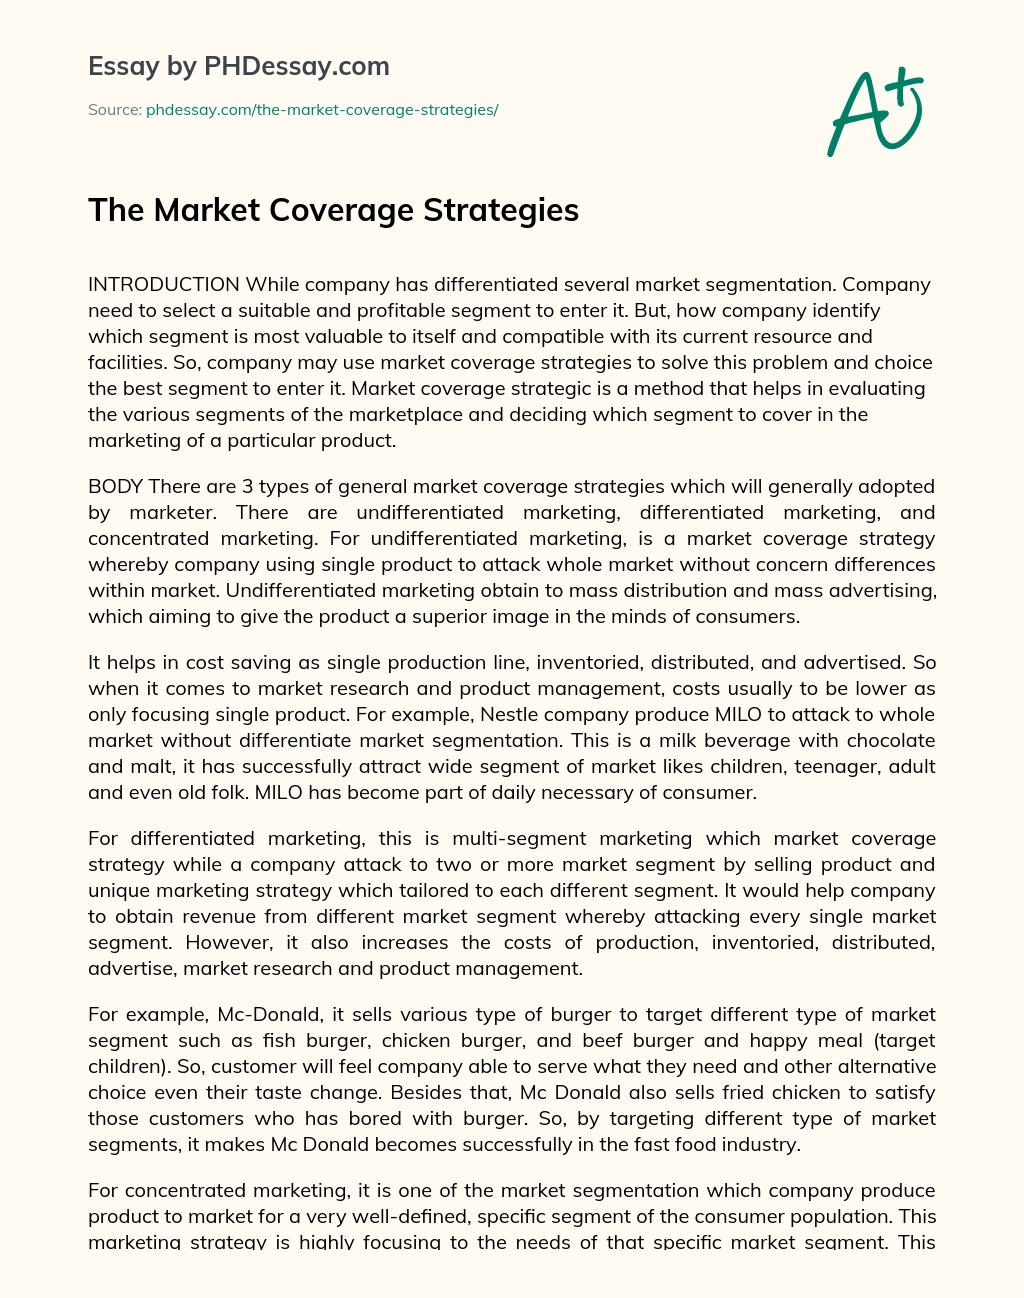 The Market Coverage Strategies essay